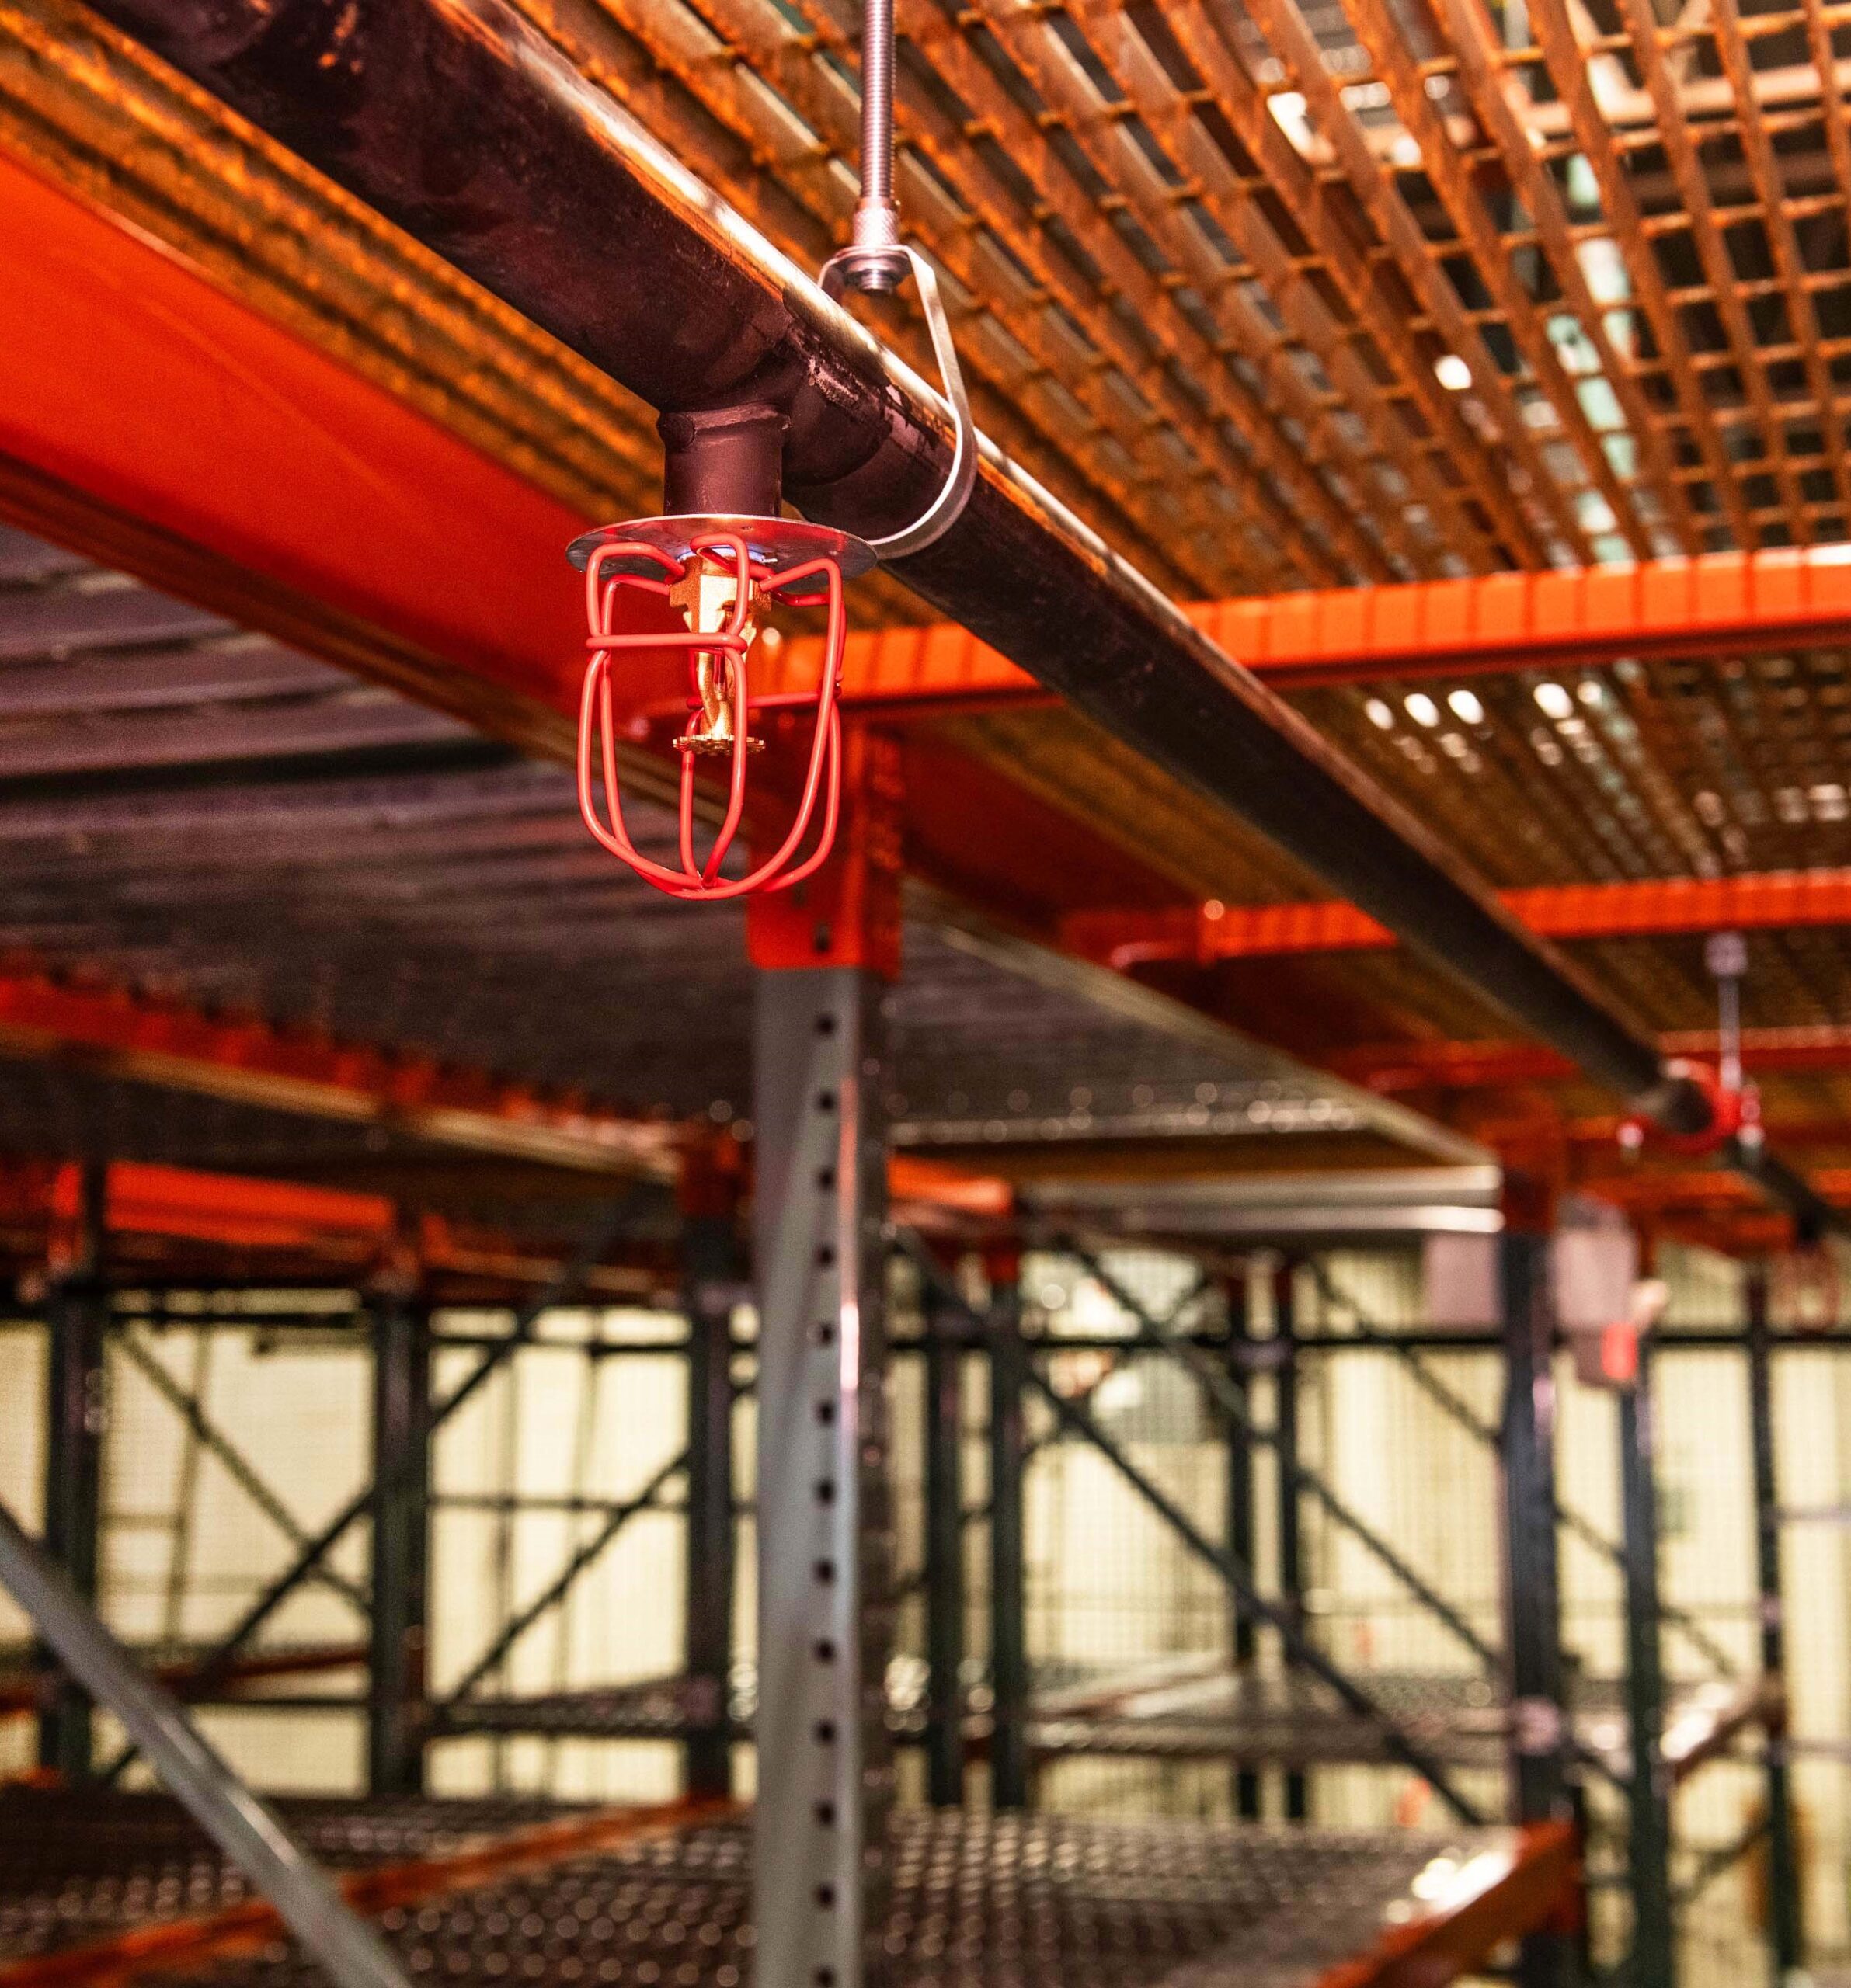 Fire sprinkler system inside of a warehouse racking system